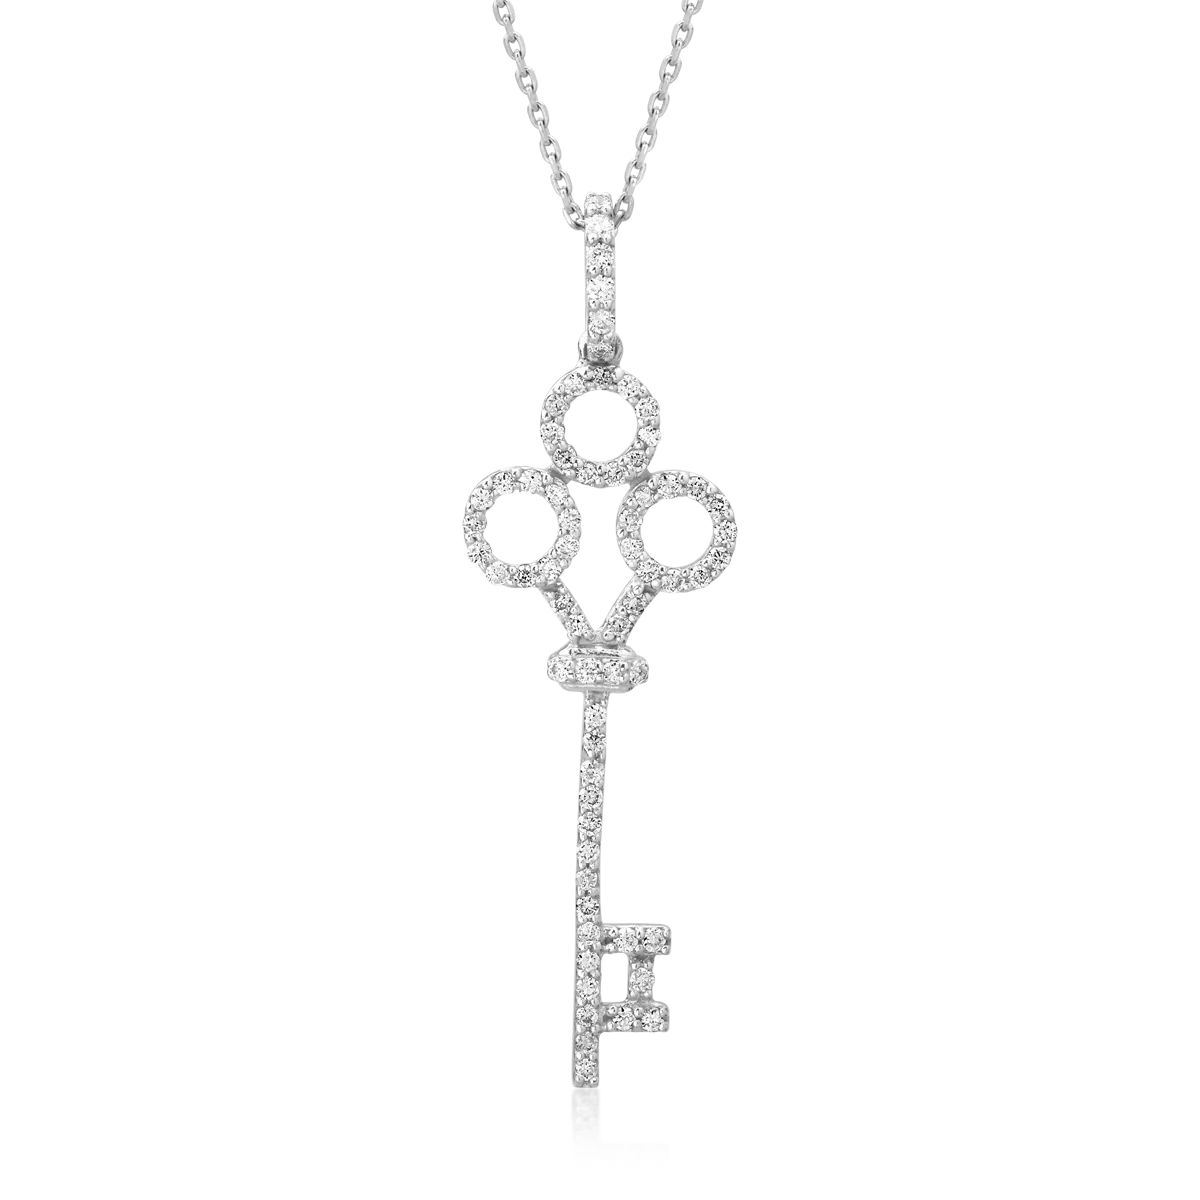 18K white gold key pendant chain with 0.18ct diamonds